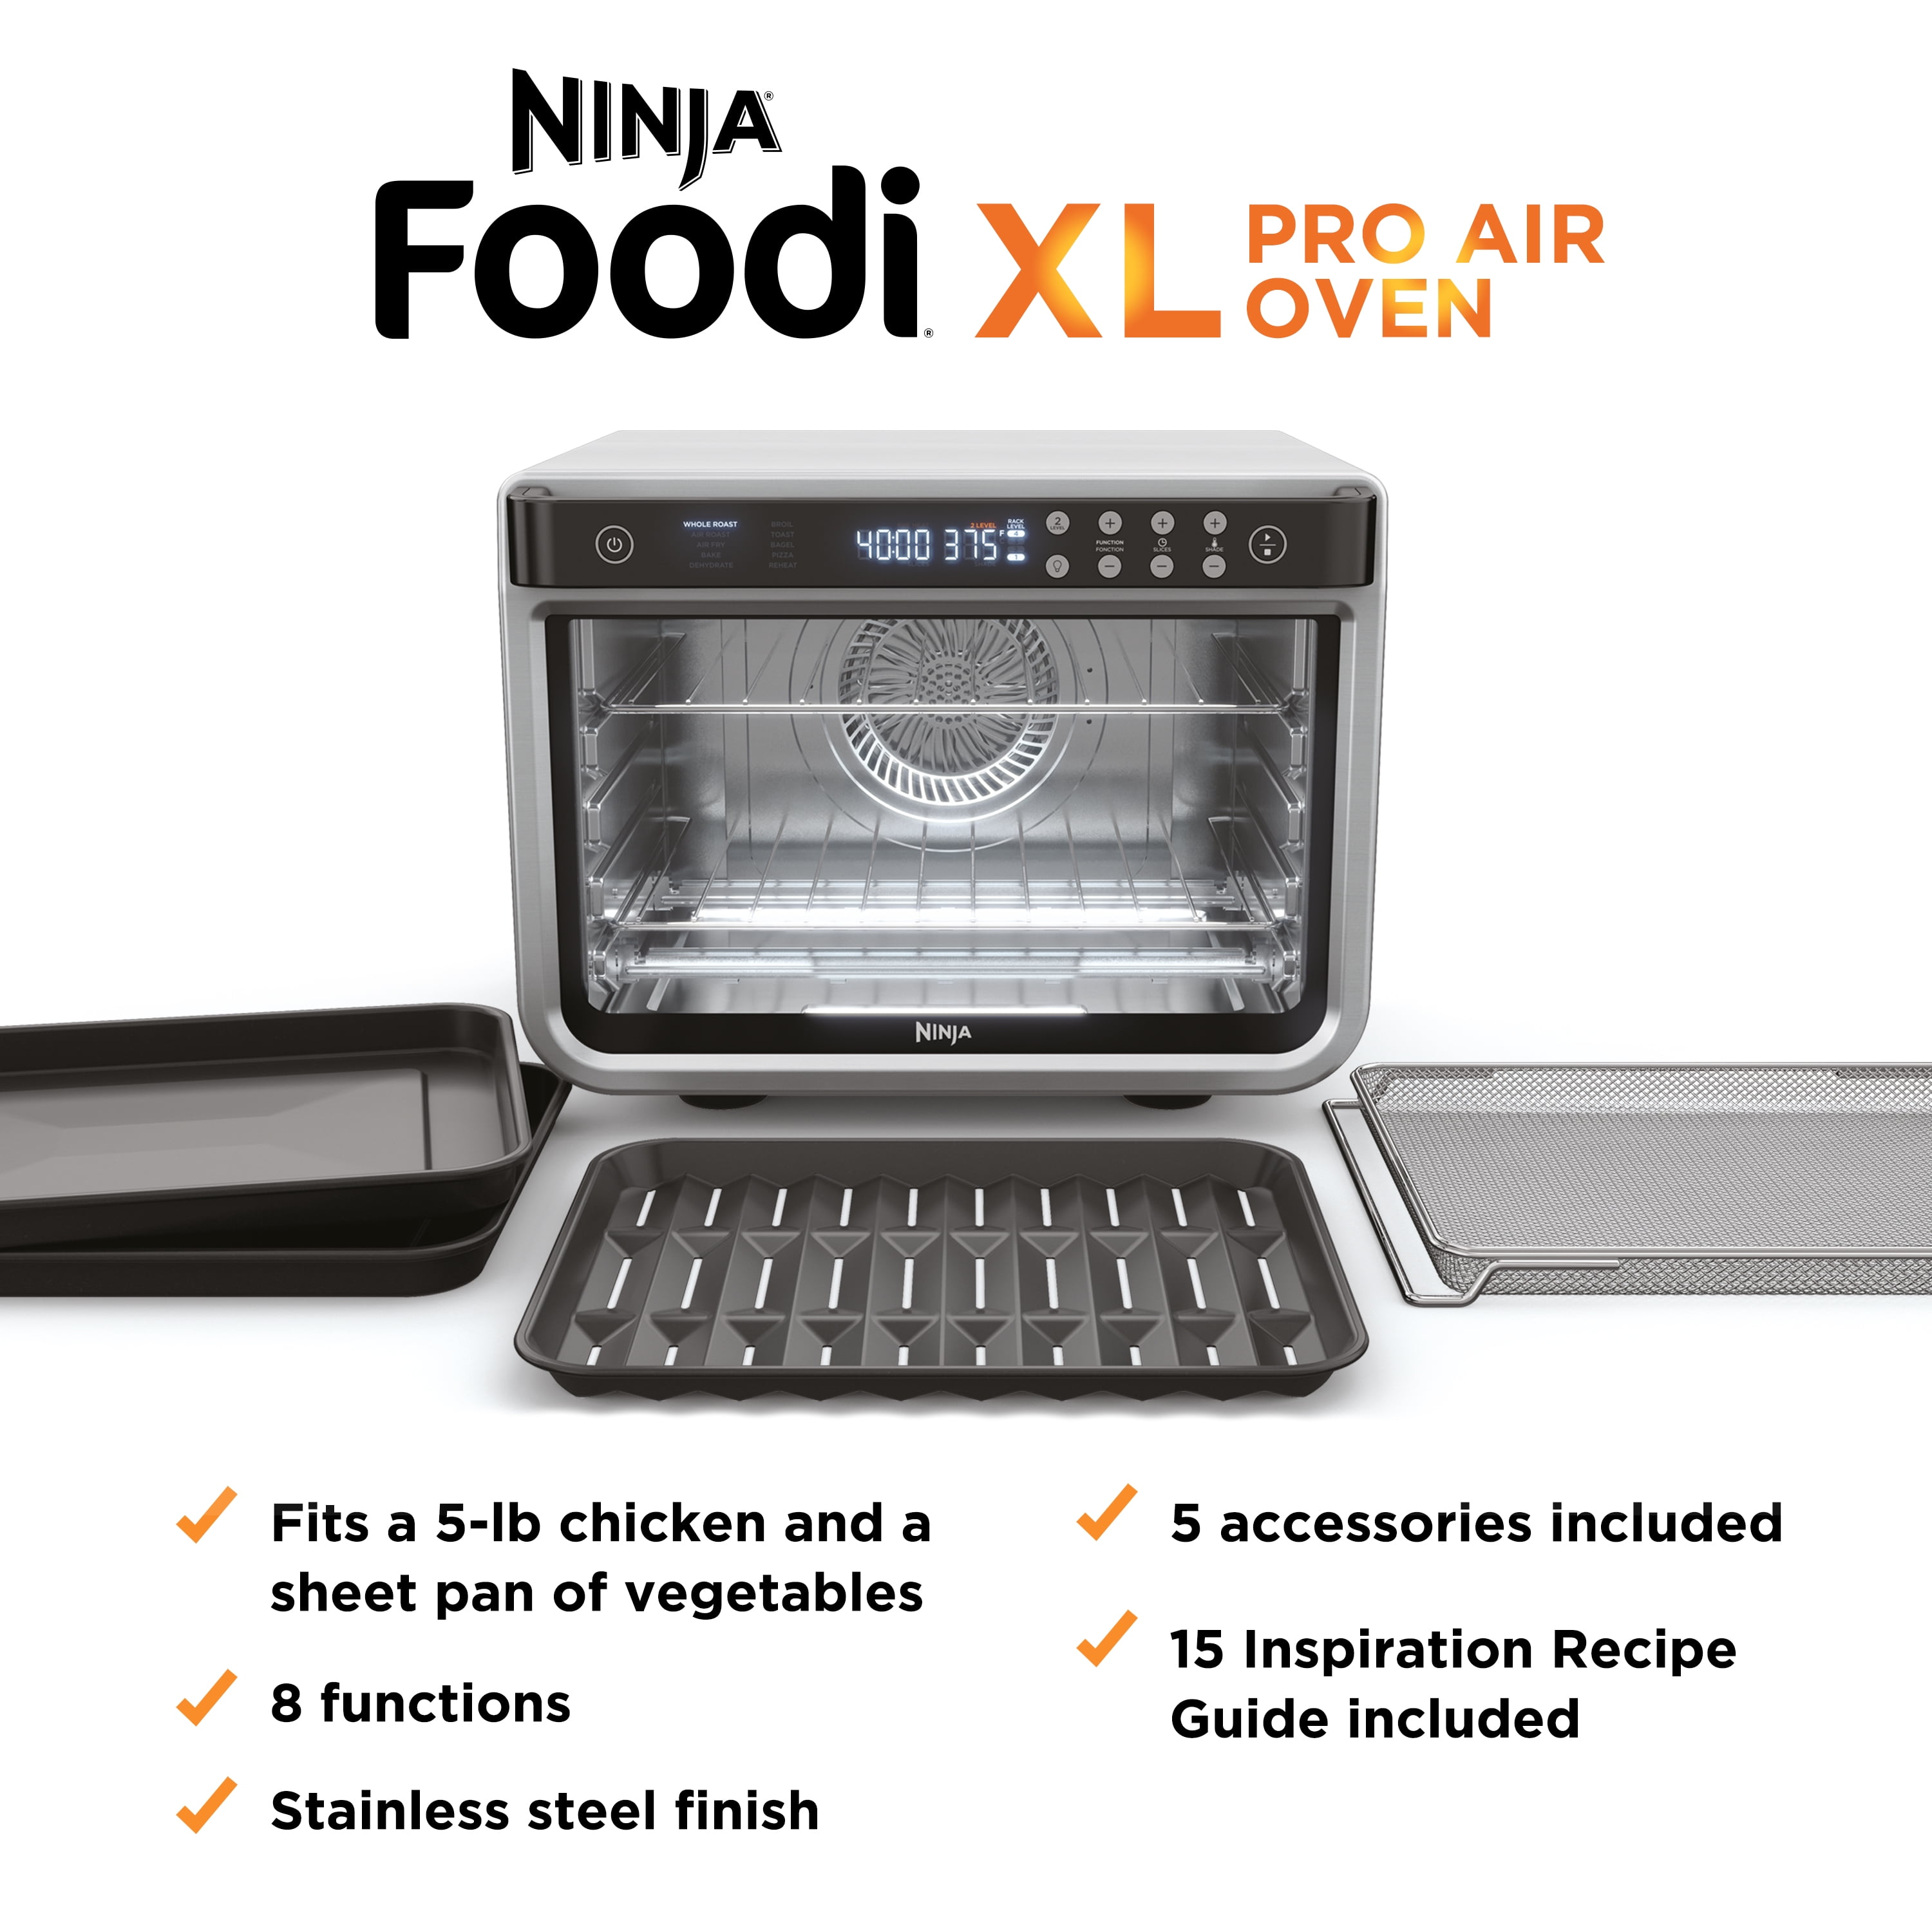 Ninja® Foodi® 7-in-1 Digital Pro Air Fry Oven, Countertop Oven, Dehydrate,  1800 Watts, SP200, New